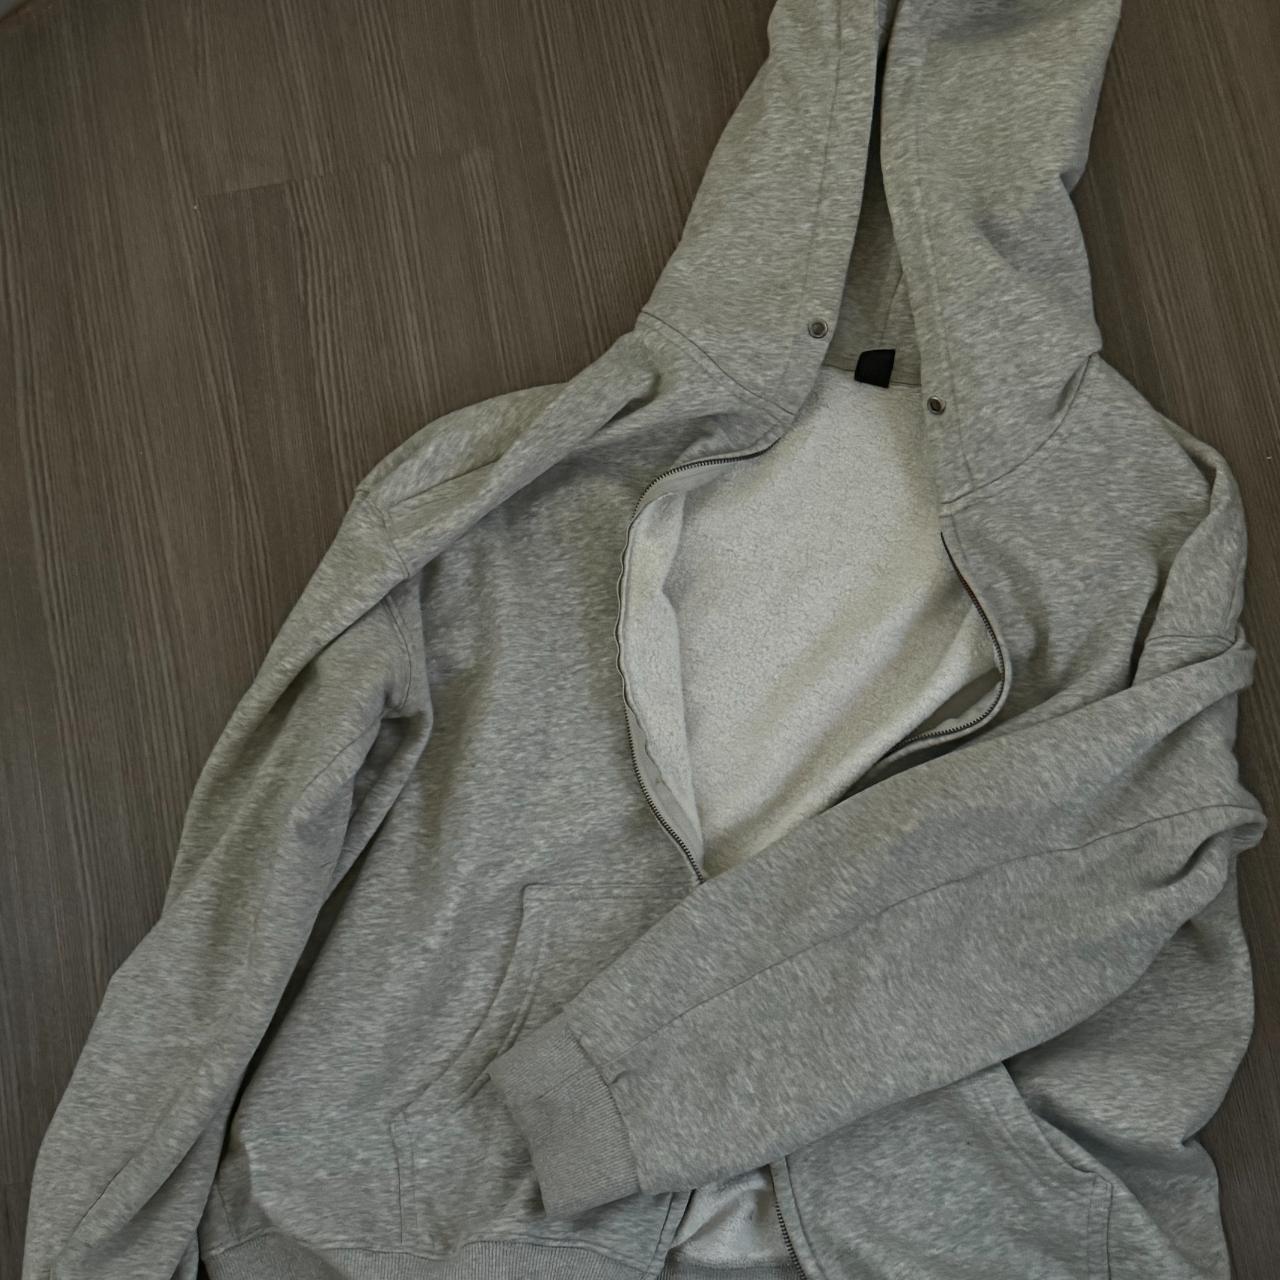 Dazy light gray zip up sweatshirt. Super soft and... - Depop